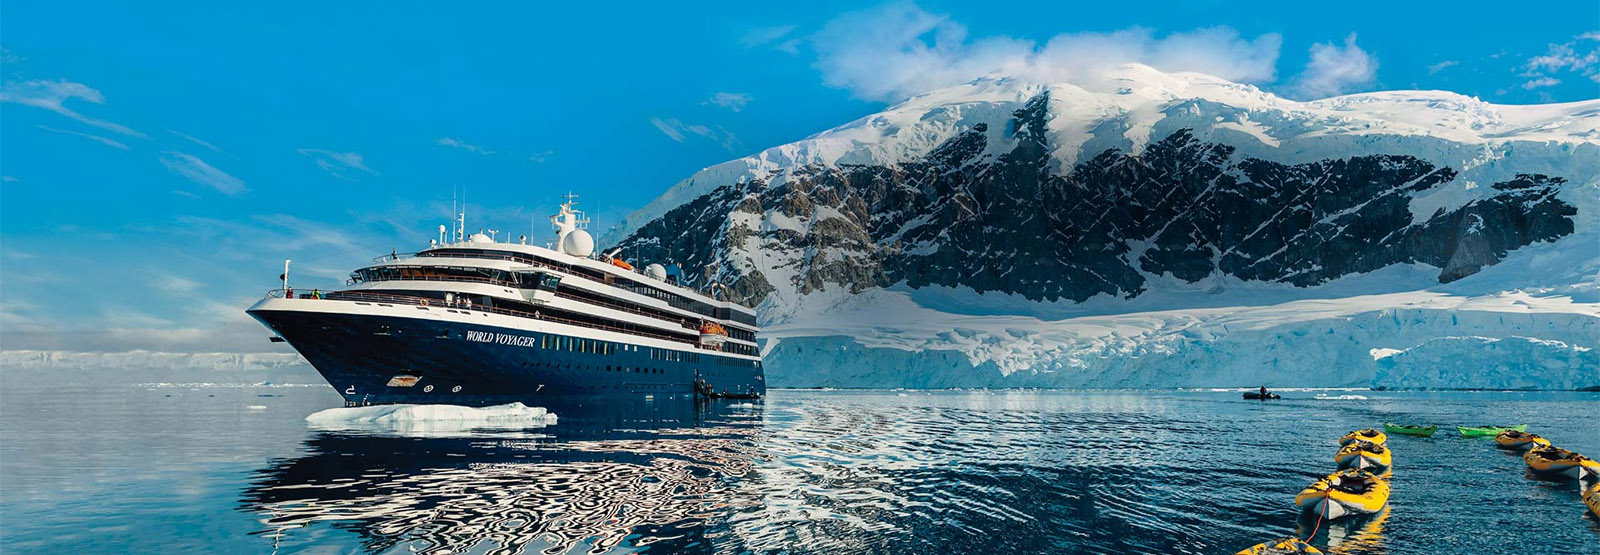 World Voyager Cruise Ship in Antarctica